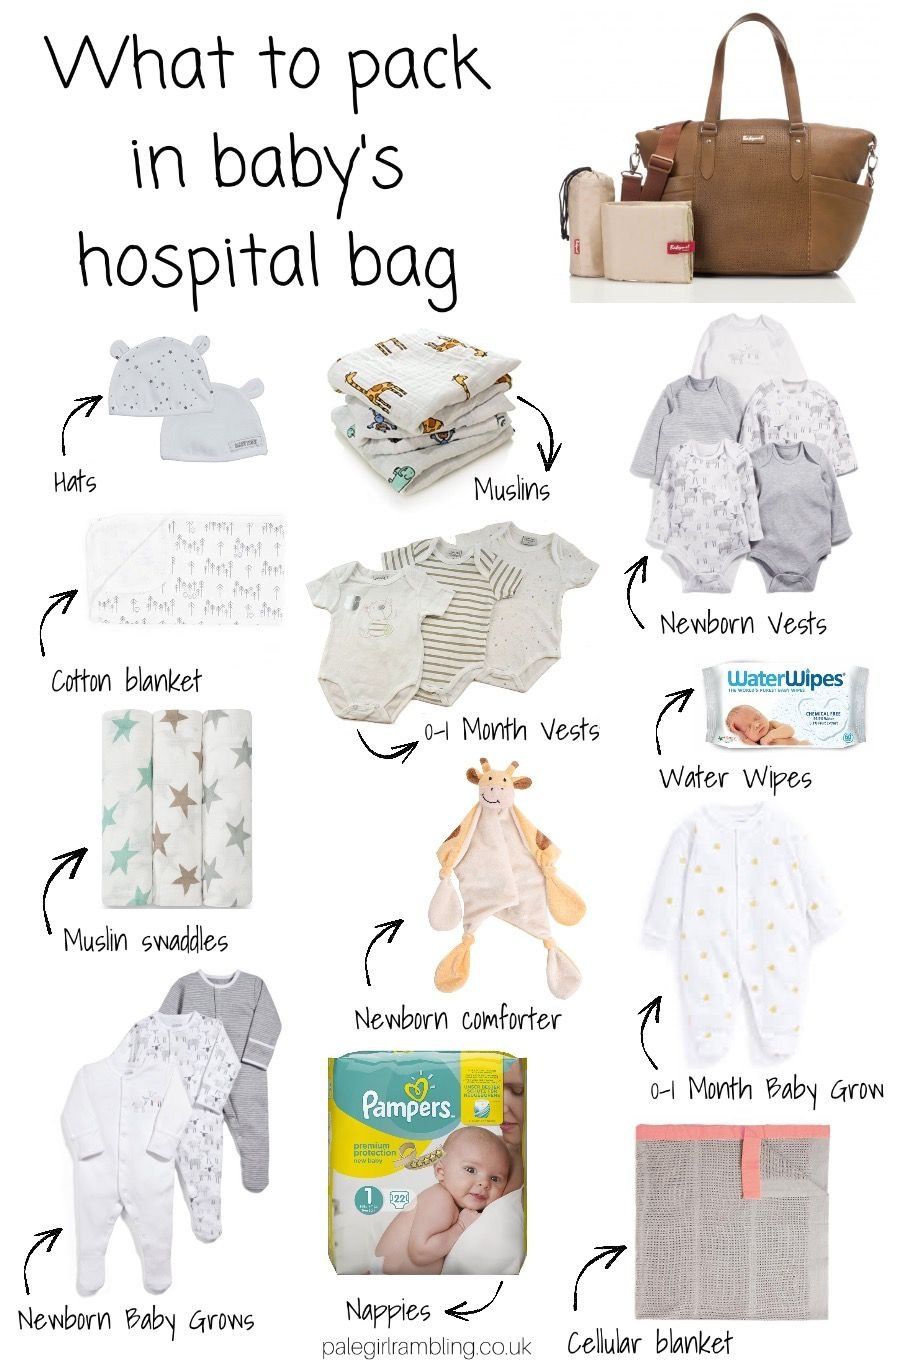 Whatâs in babyâs hospital bag